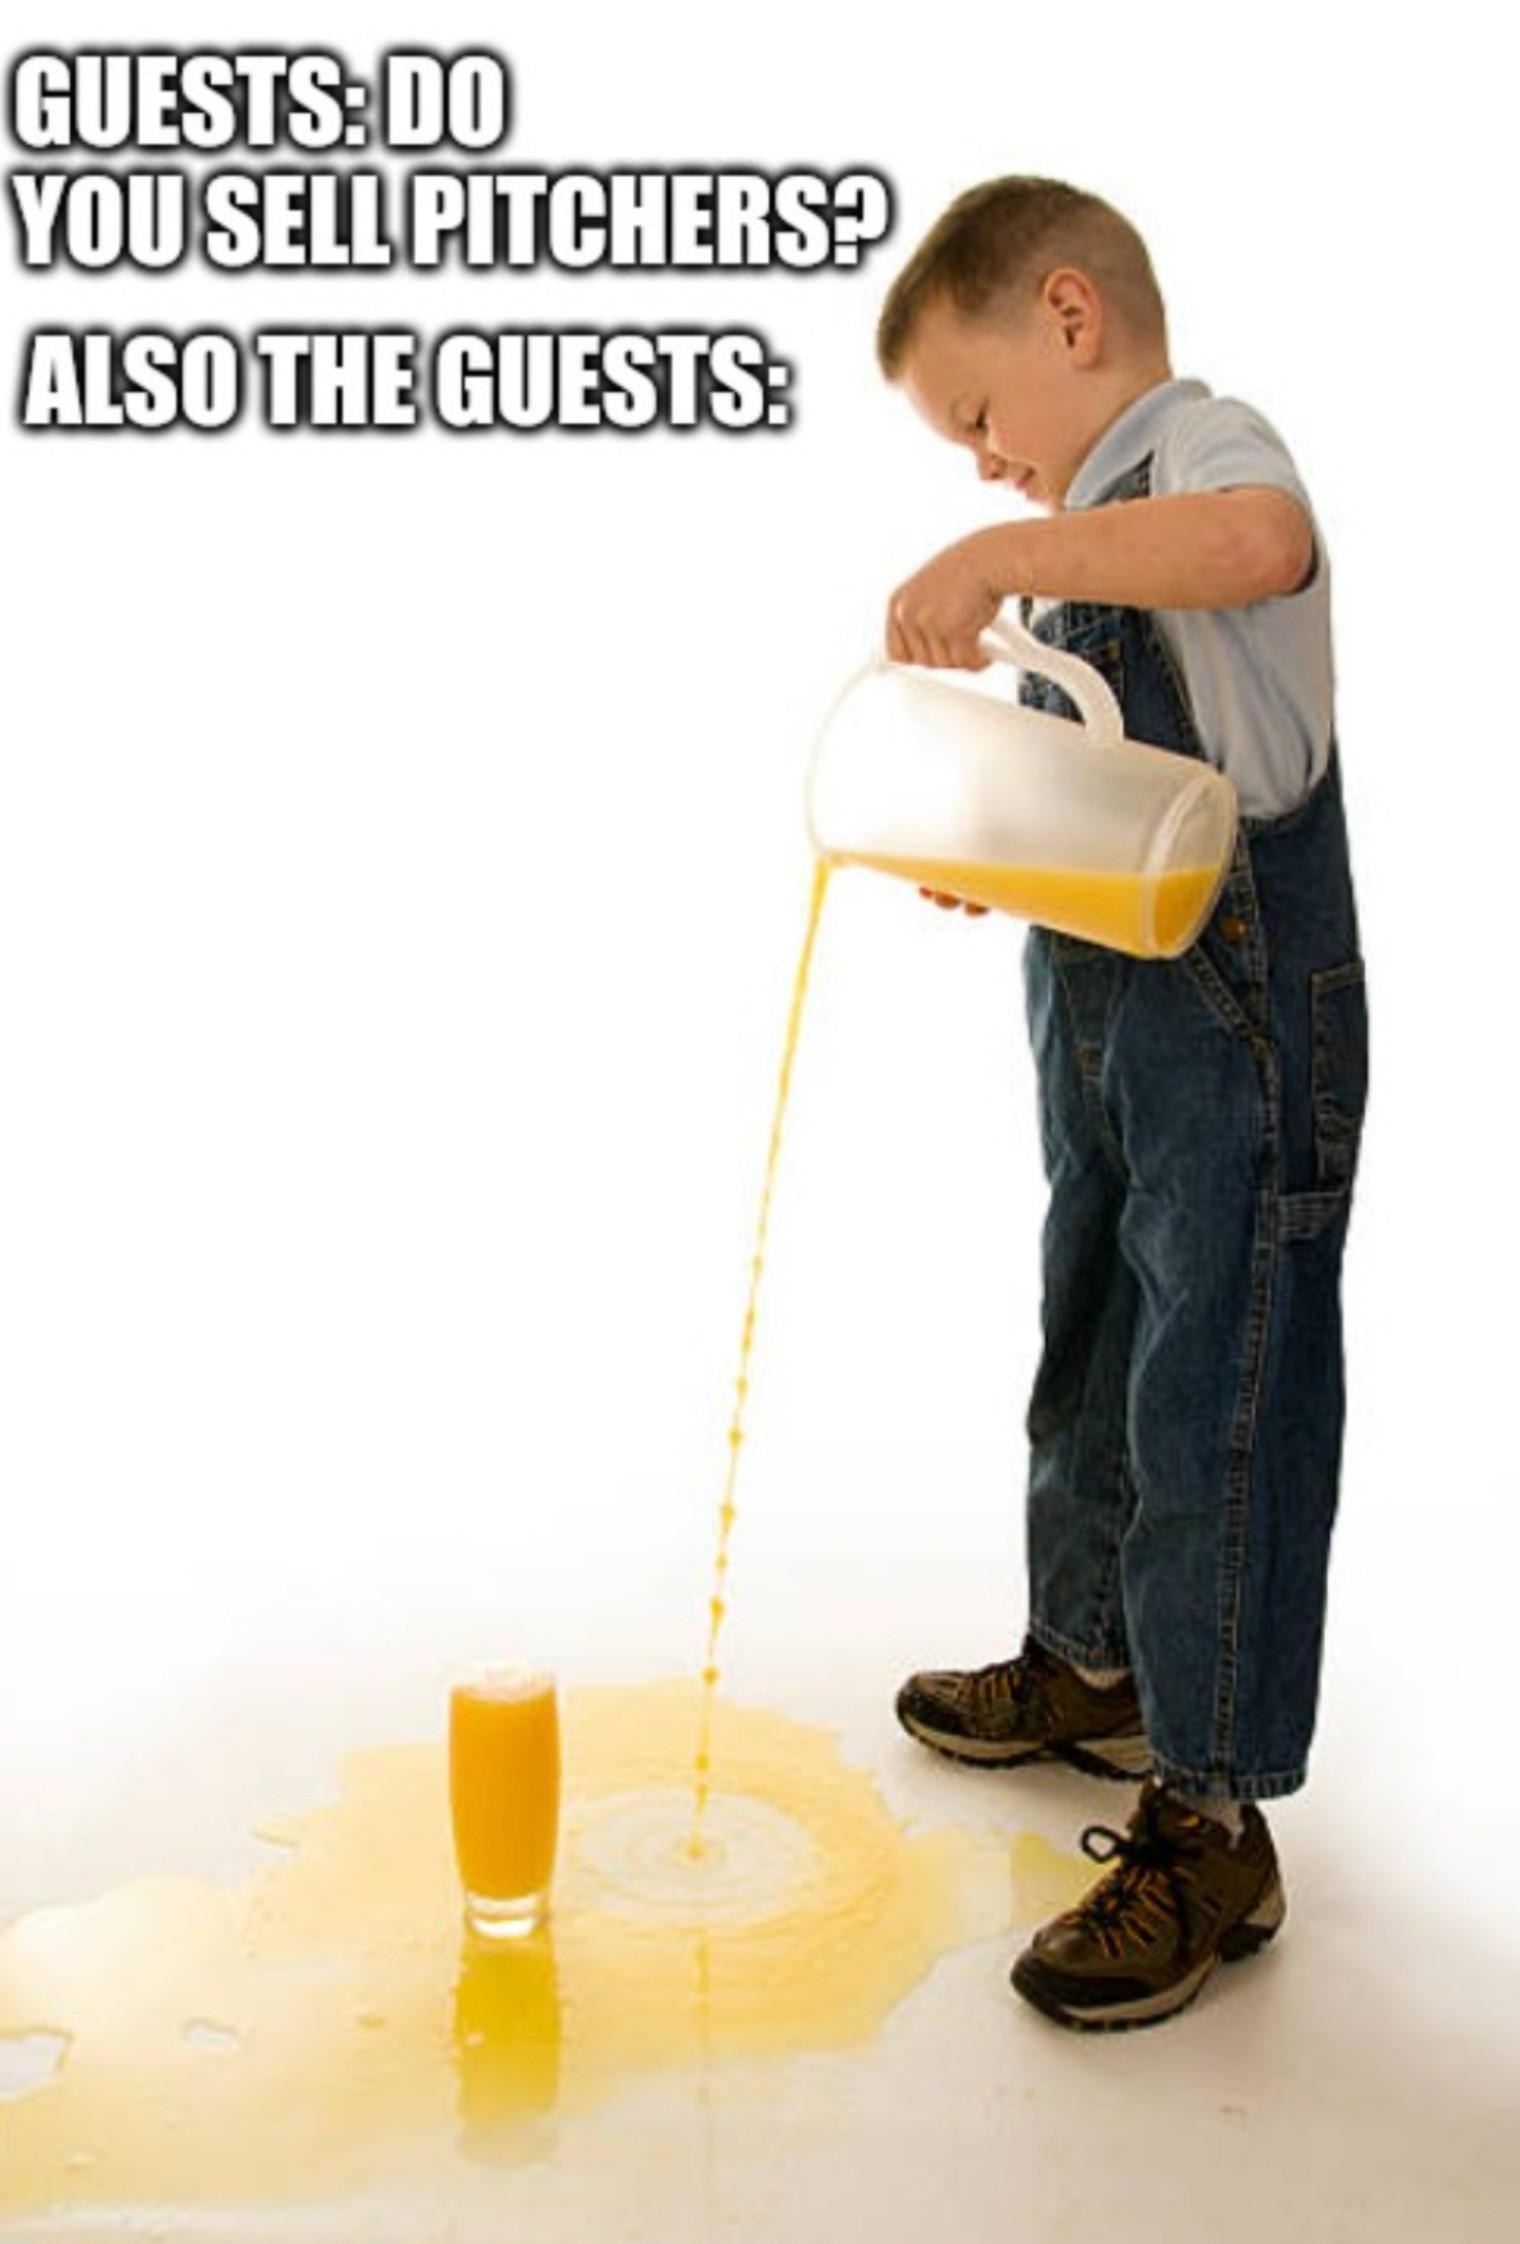 A little boy spilling juice on the floor